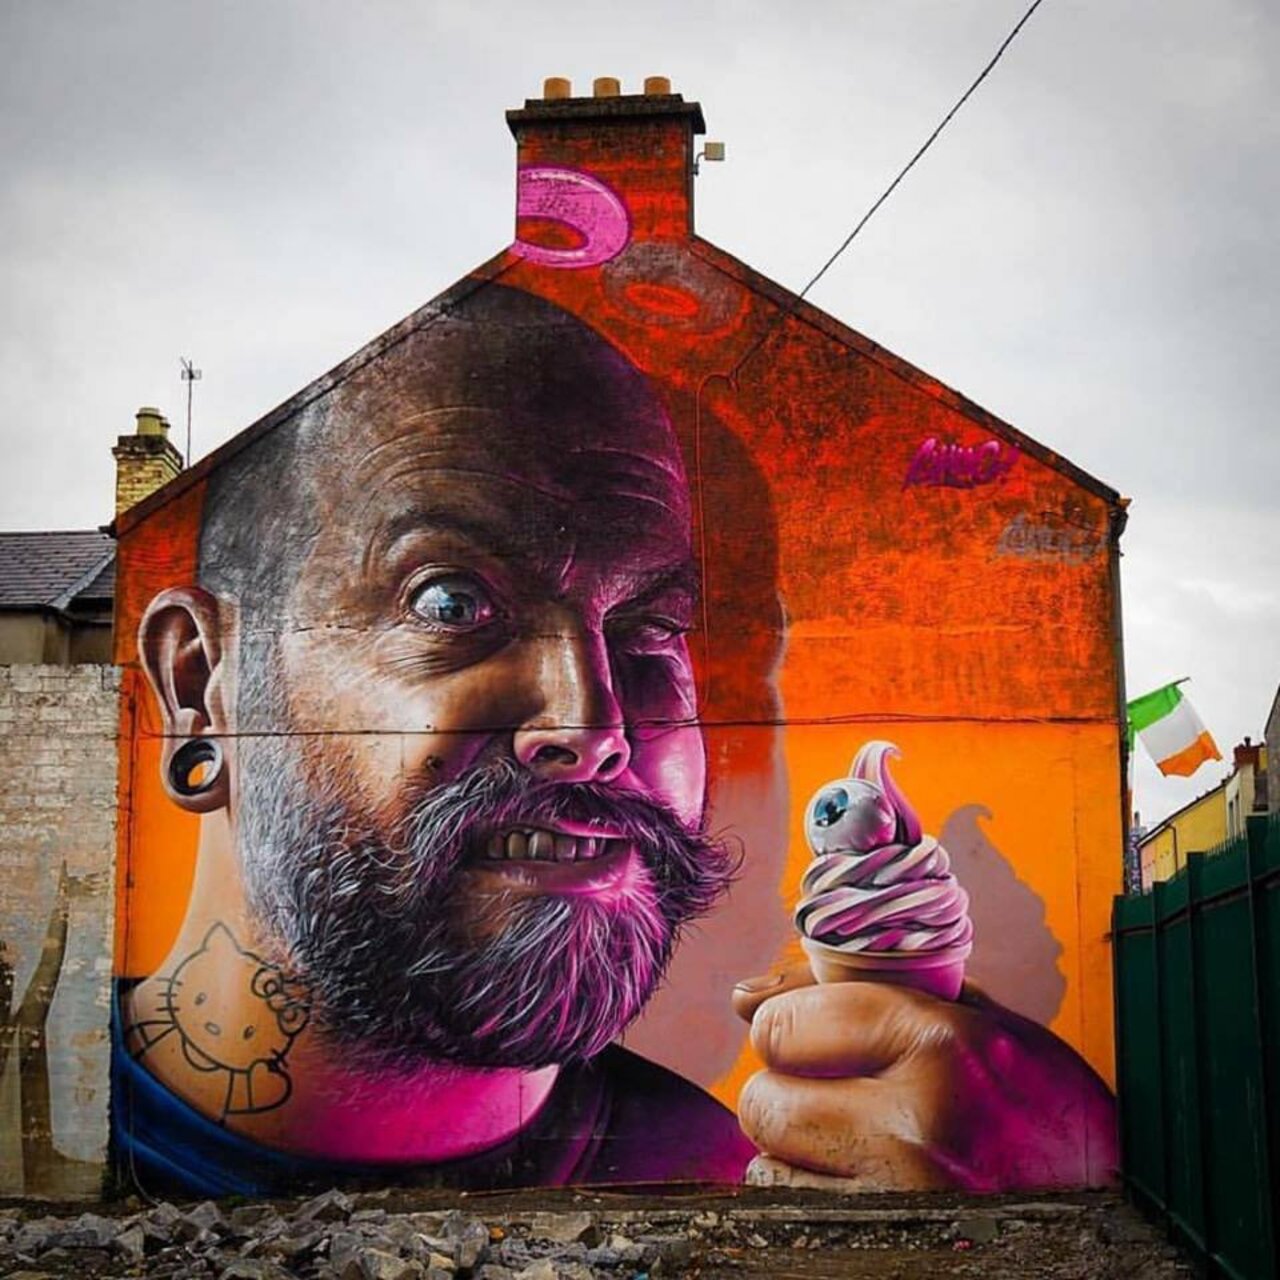 #mural by Smug #Limerick #Ireland #streetart #art #urbanart #graffiti https://t.co/DDoyjzx6c1